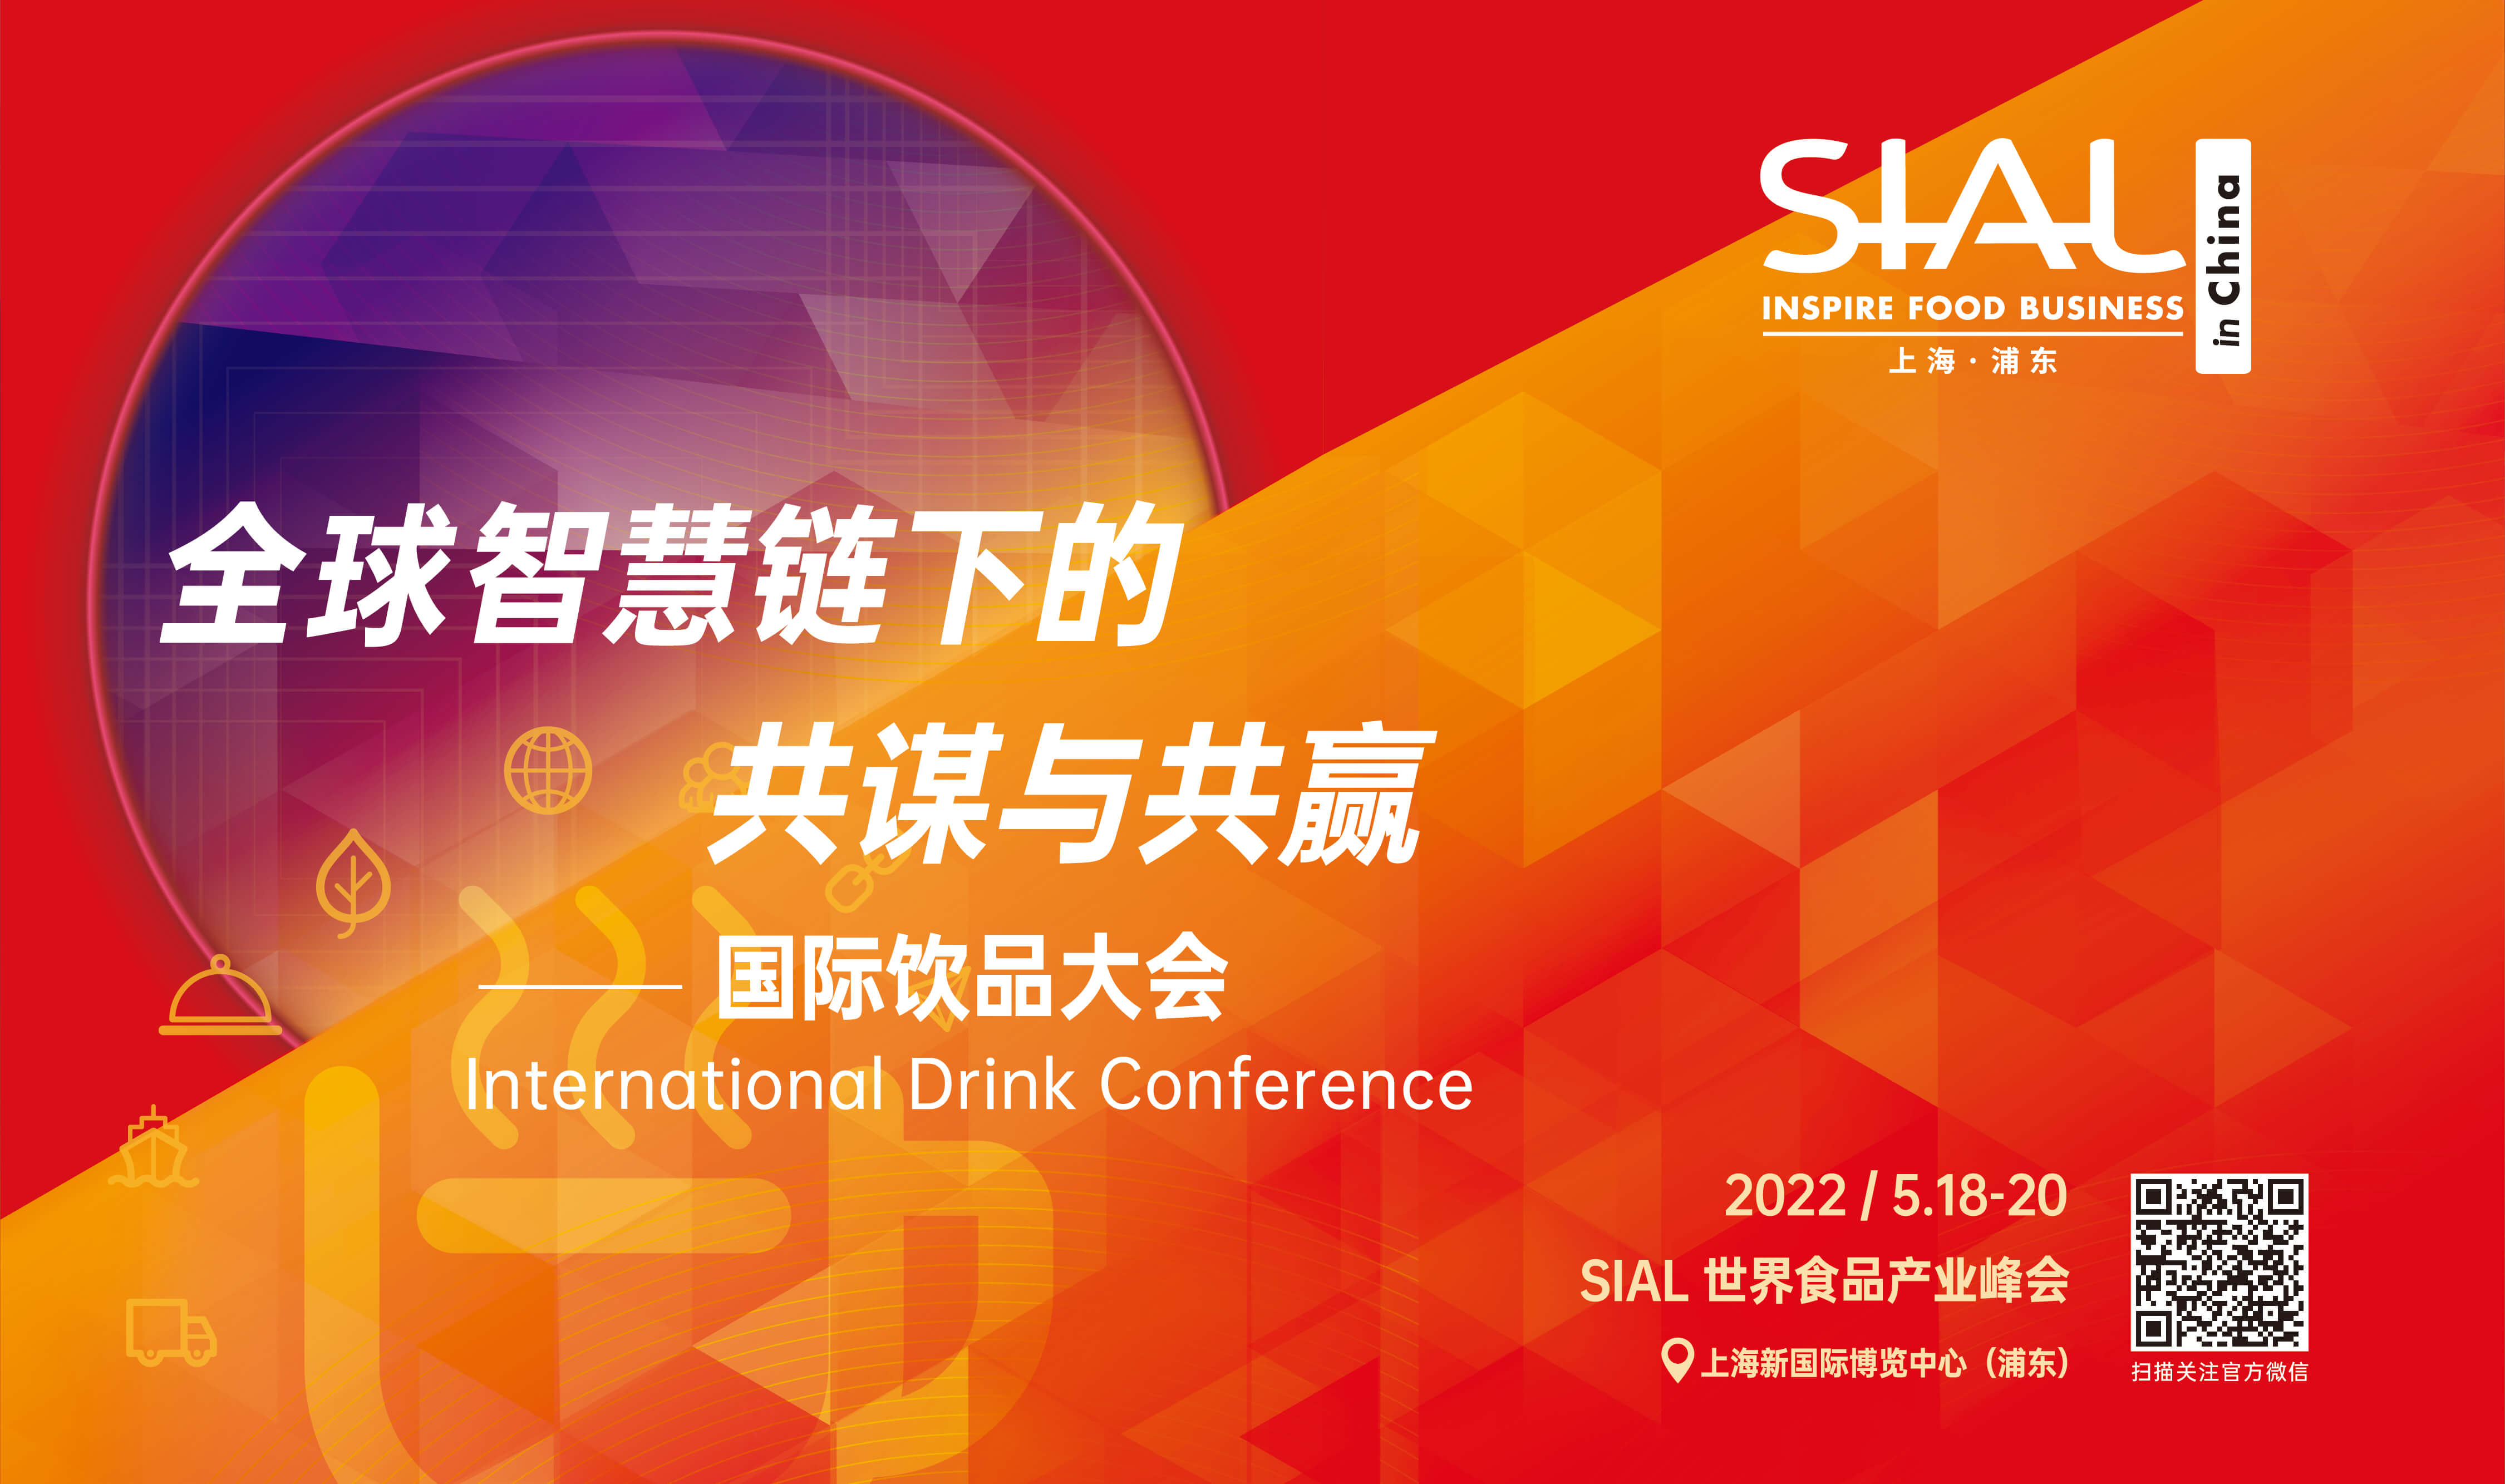 International Drink Conference